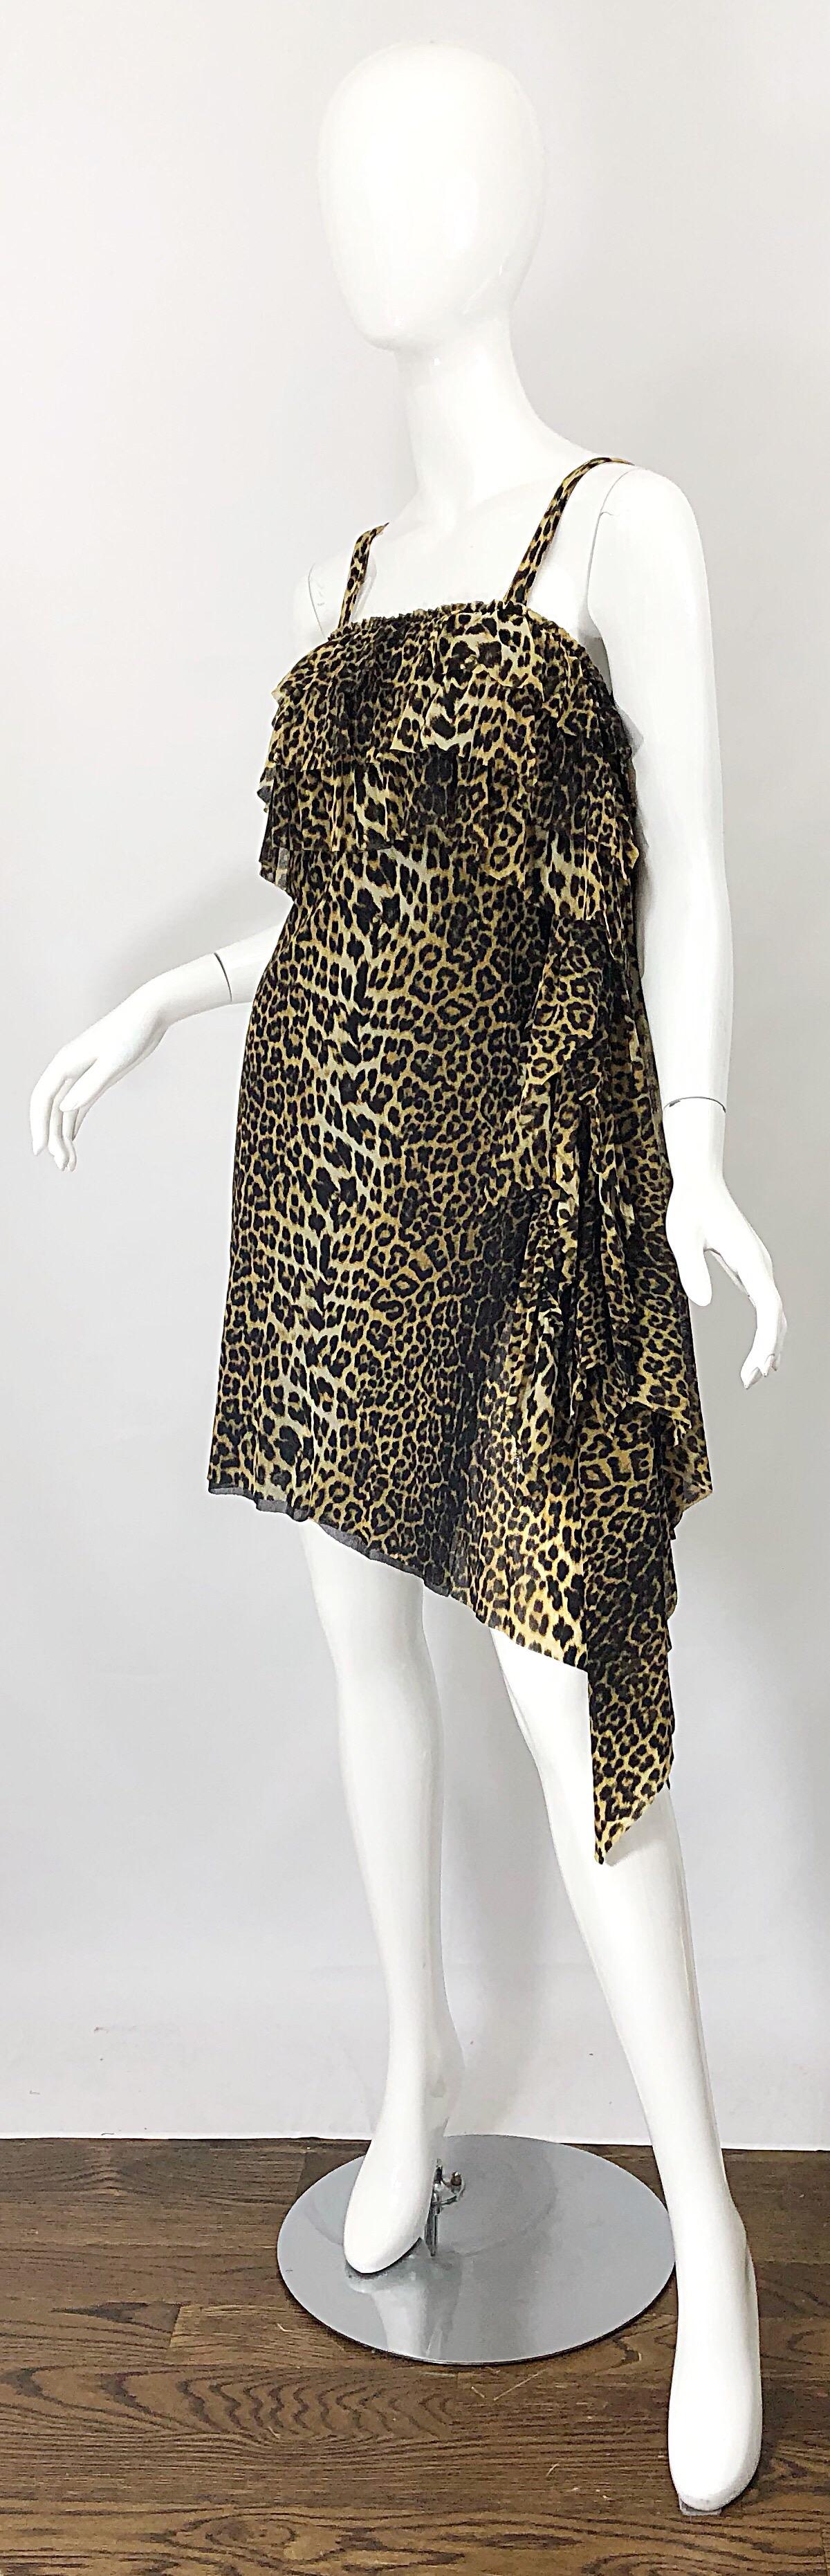 Vintage Jean Paul Gaultier 1990s Leopard Cheetah Animal Print 90s Sash Dress For Sale 1